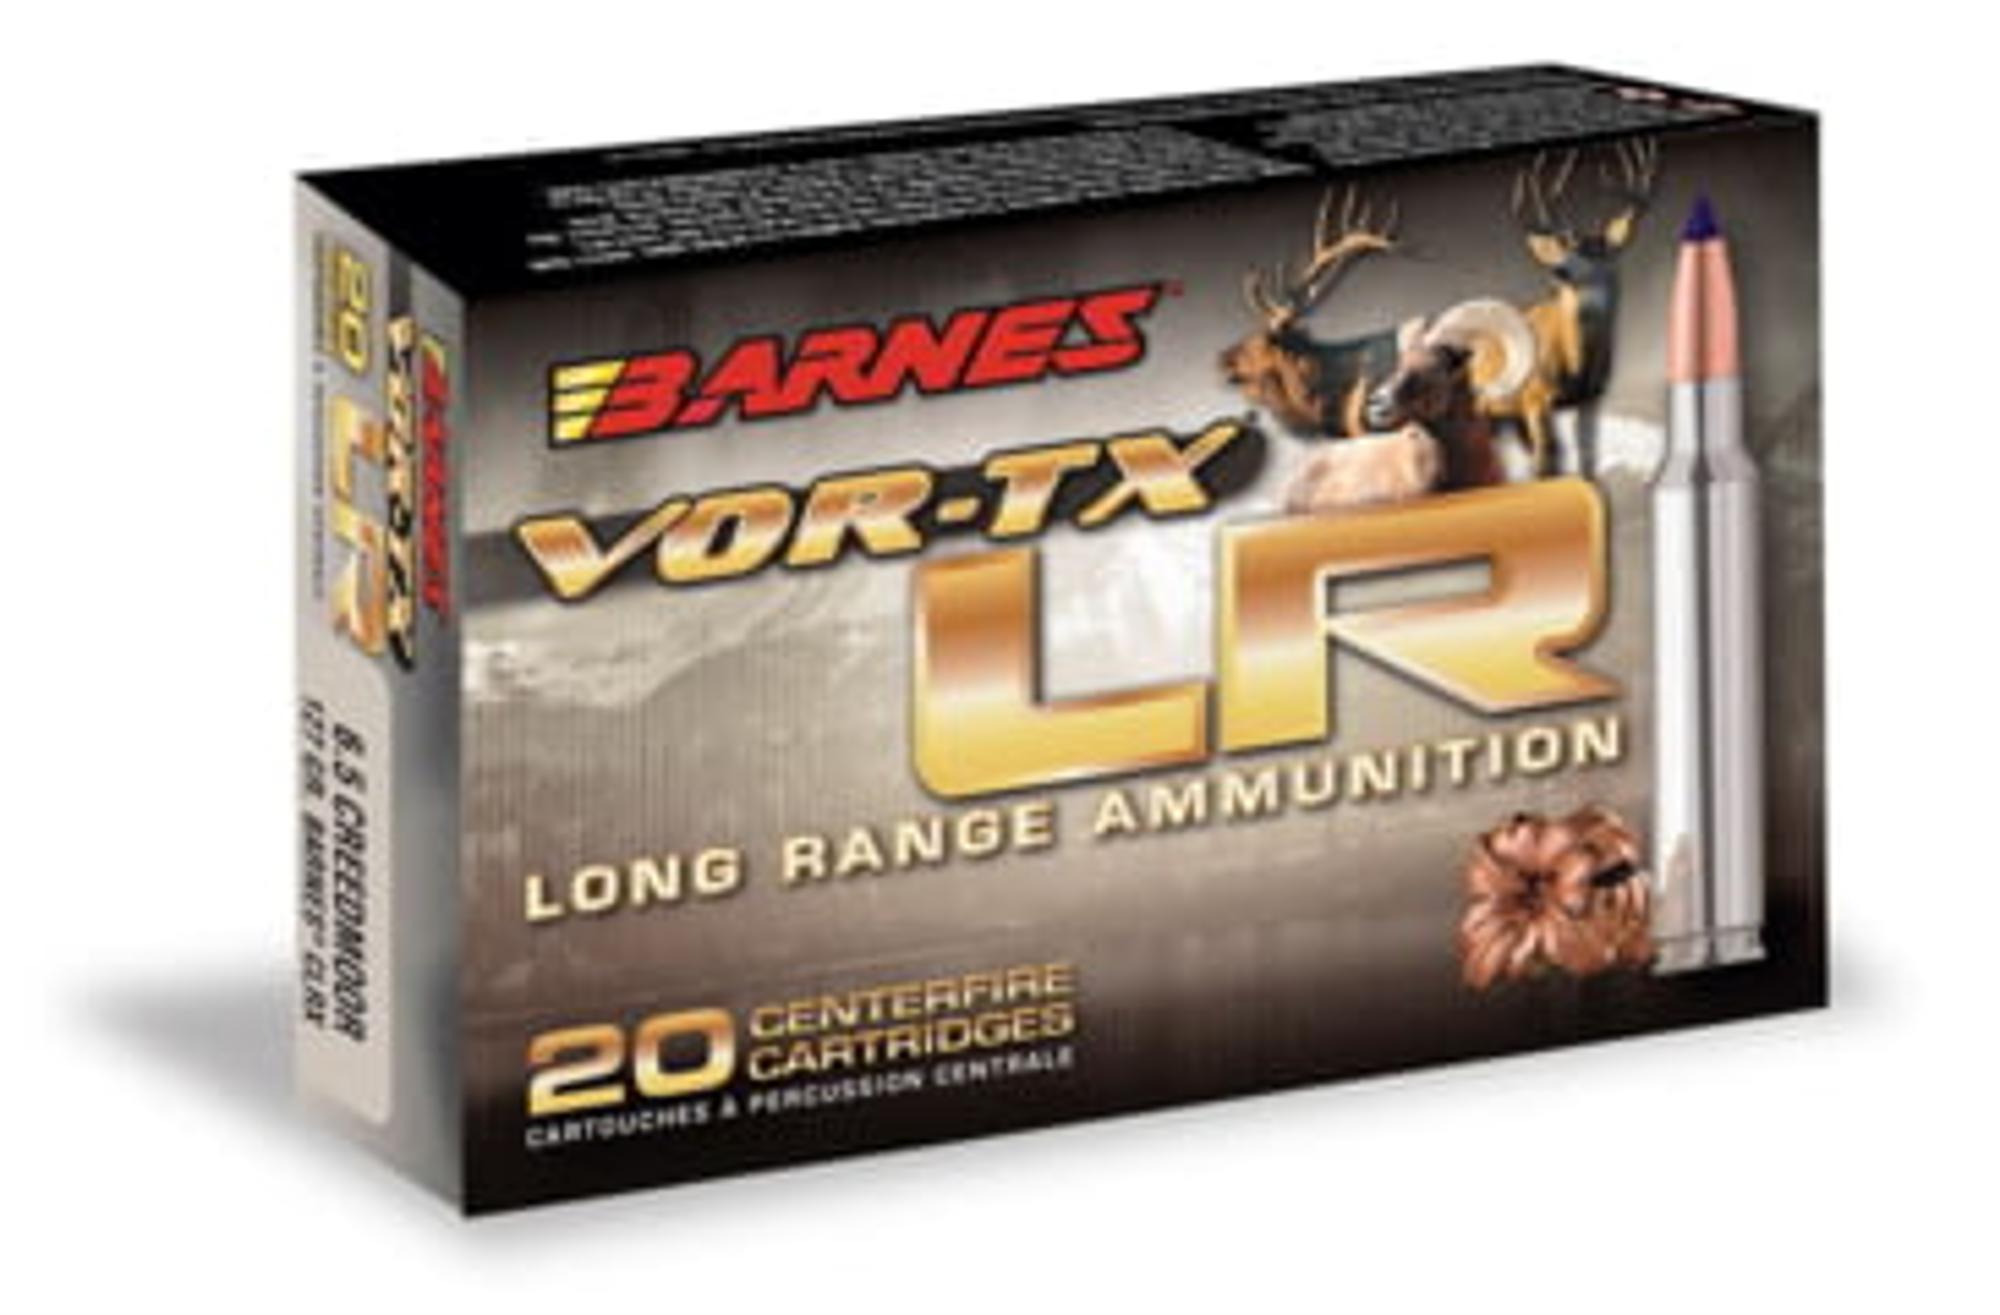 Barnes Vor- Tx Long Range 6.5 Prc 127 Grain Lrx 20 Round Box